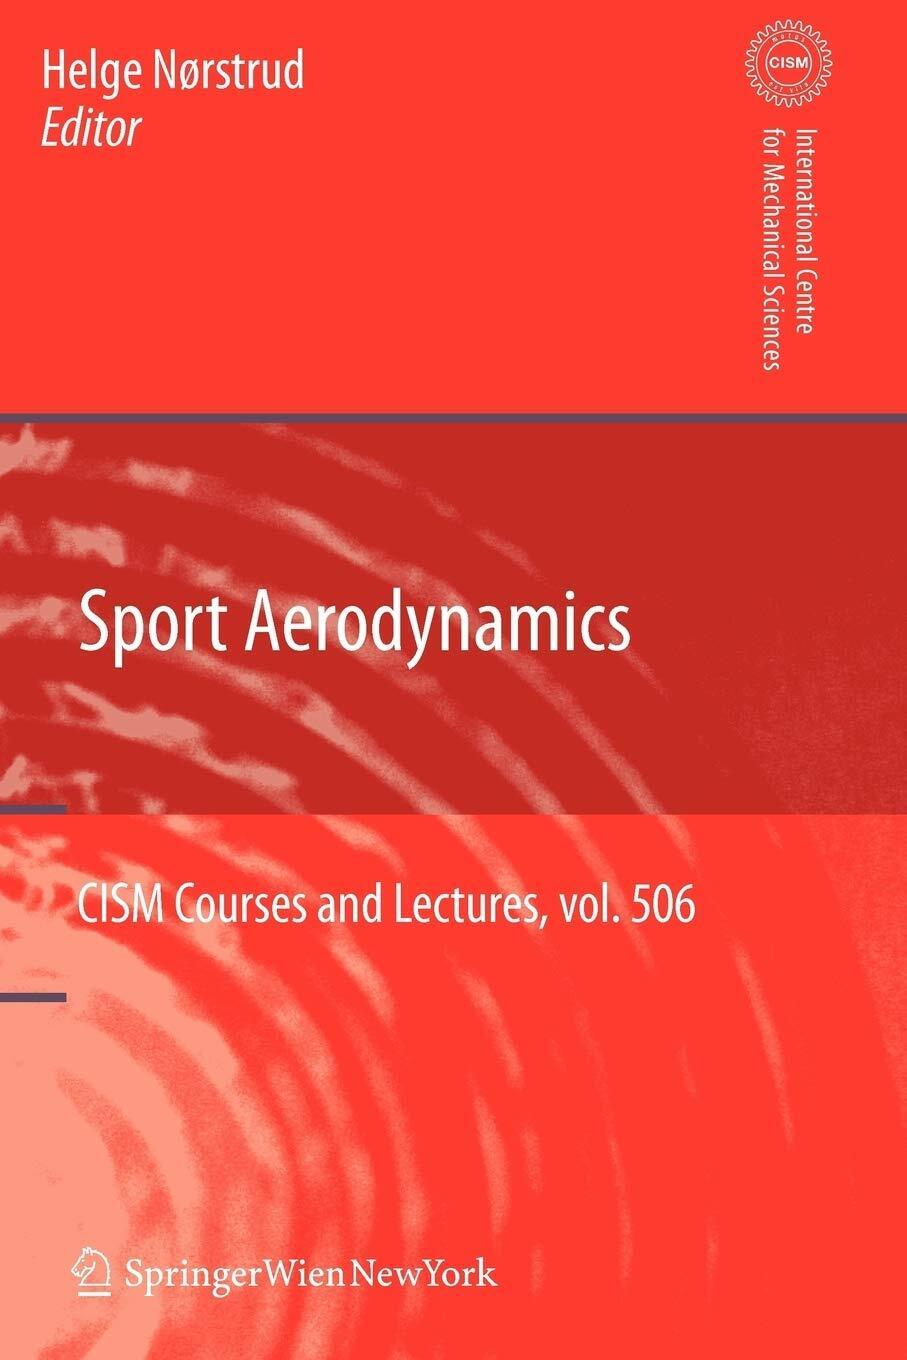 Sport Aerodynamics - Helge Noerstrud - Springer, 2010